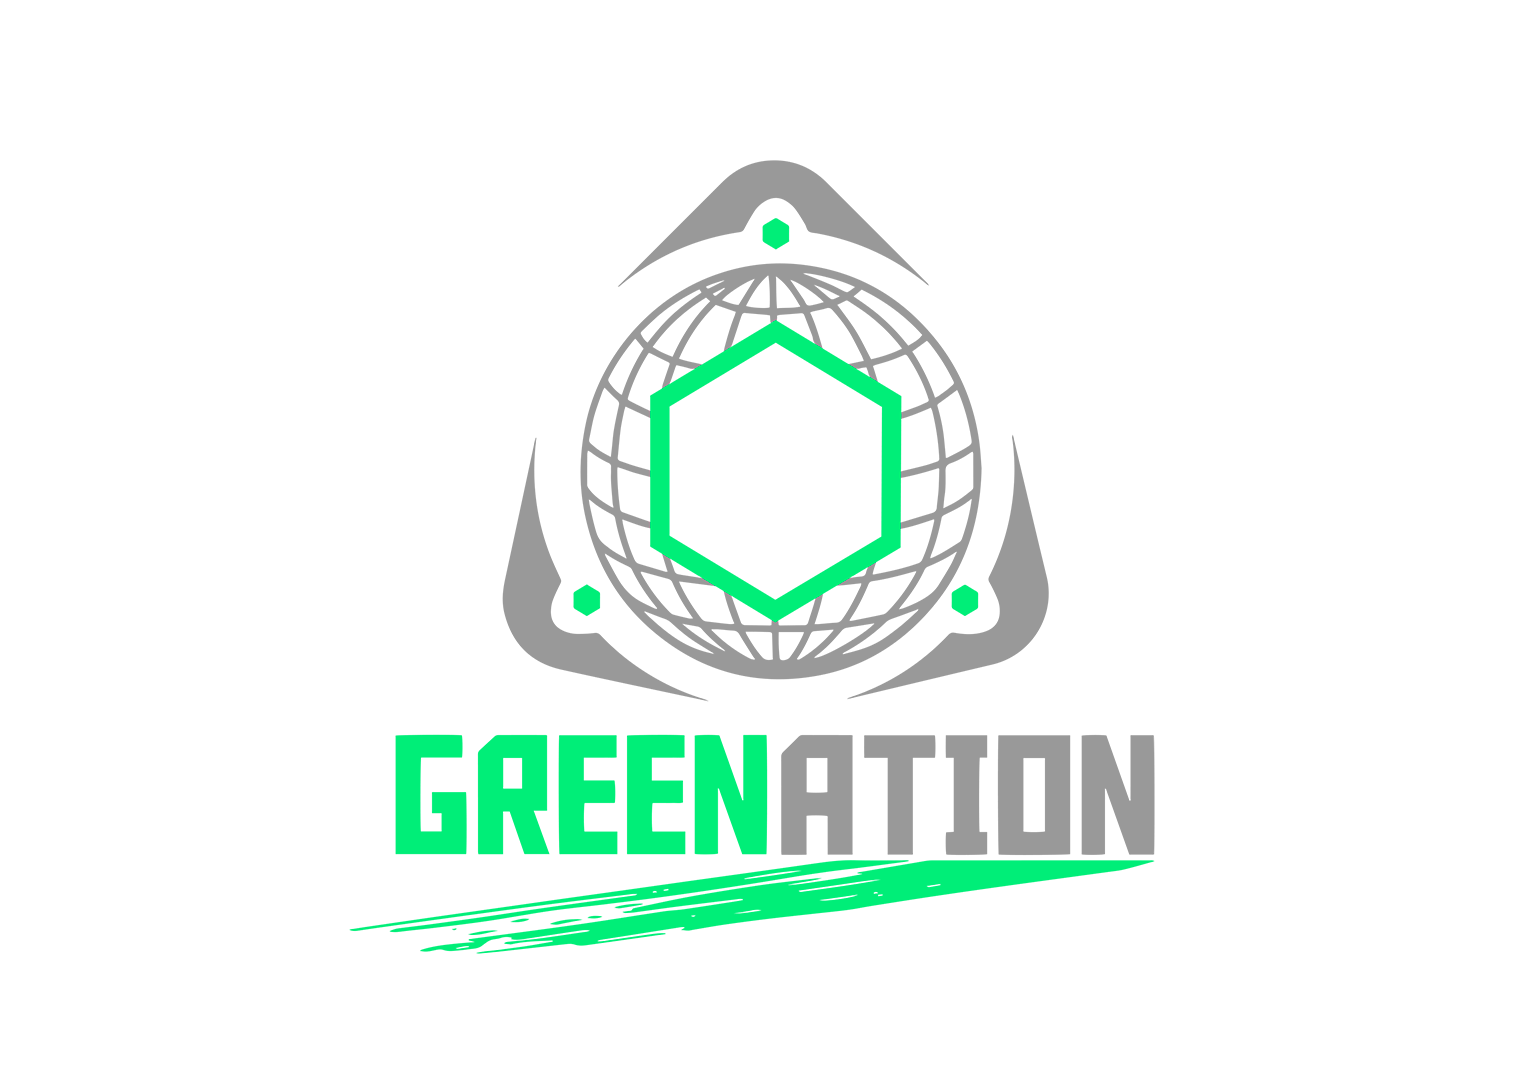 greenation logo